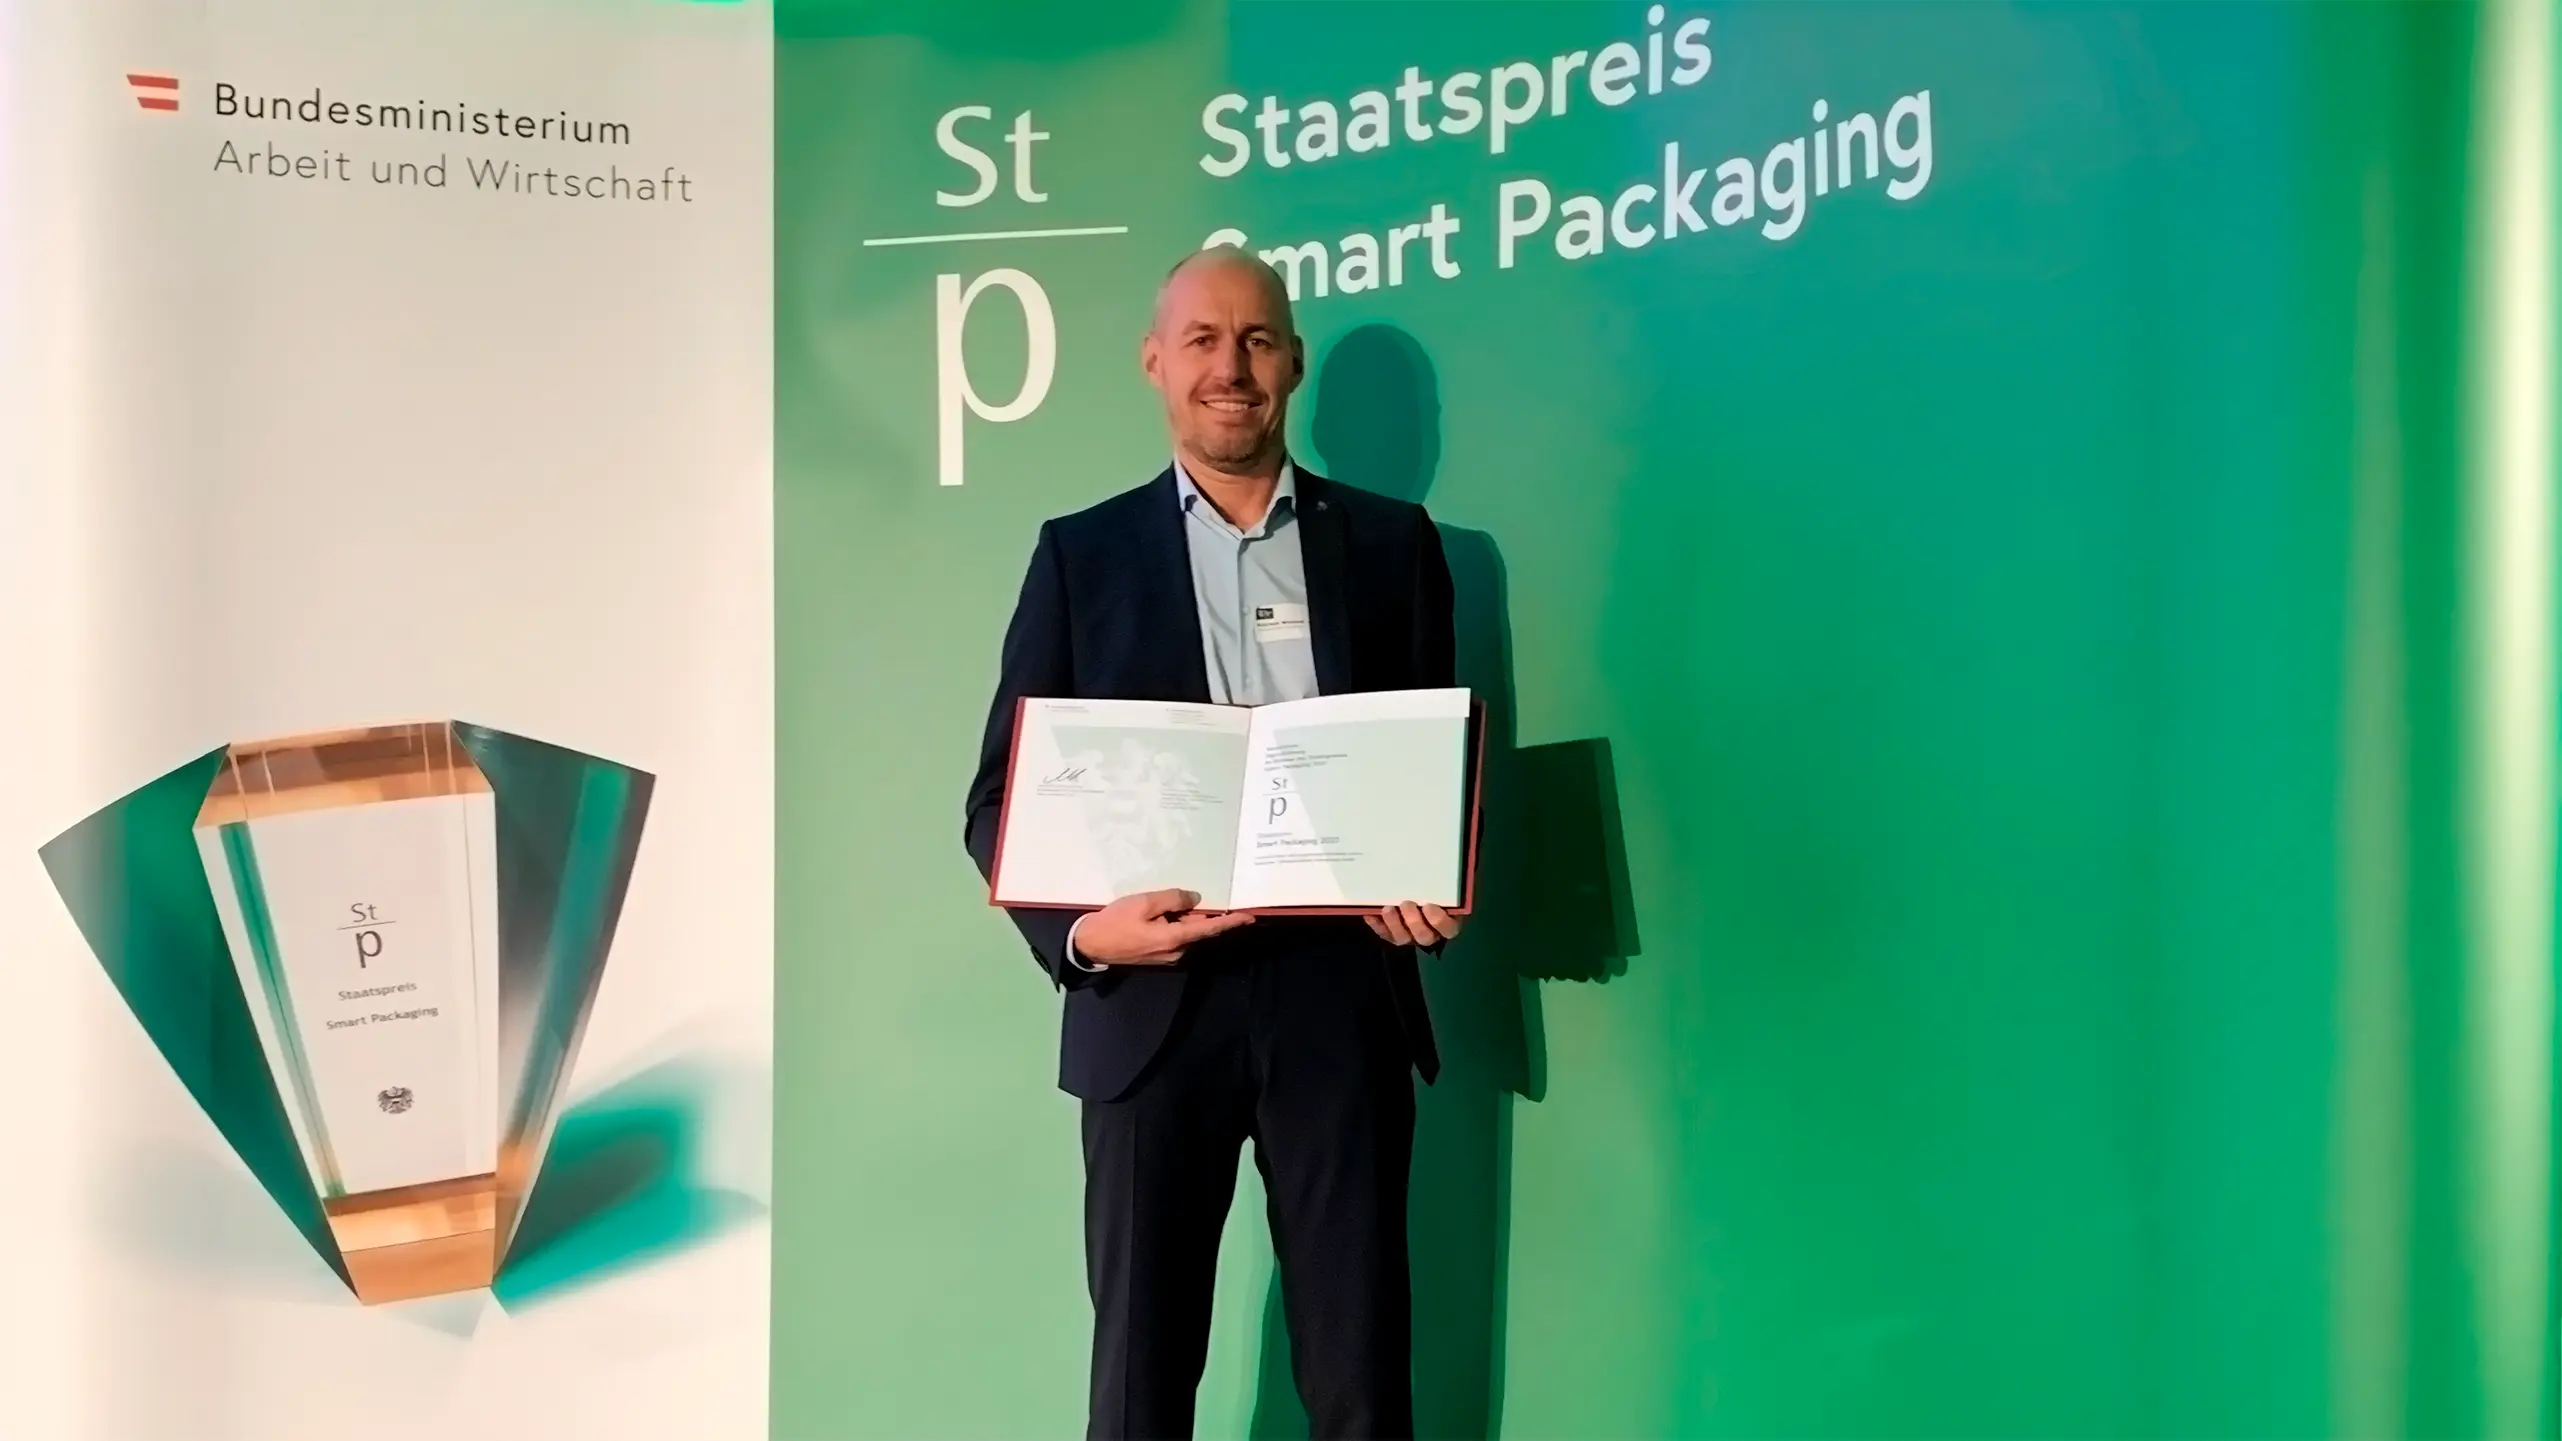 Staatspreis ‚Smart Packaging‘ für den Onlineshop "die-verpackungs-druckerei"